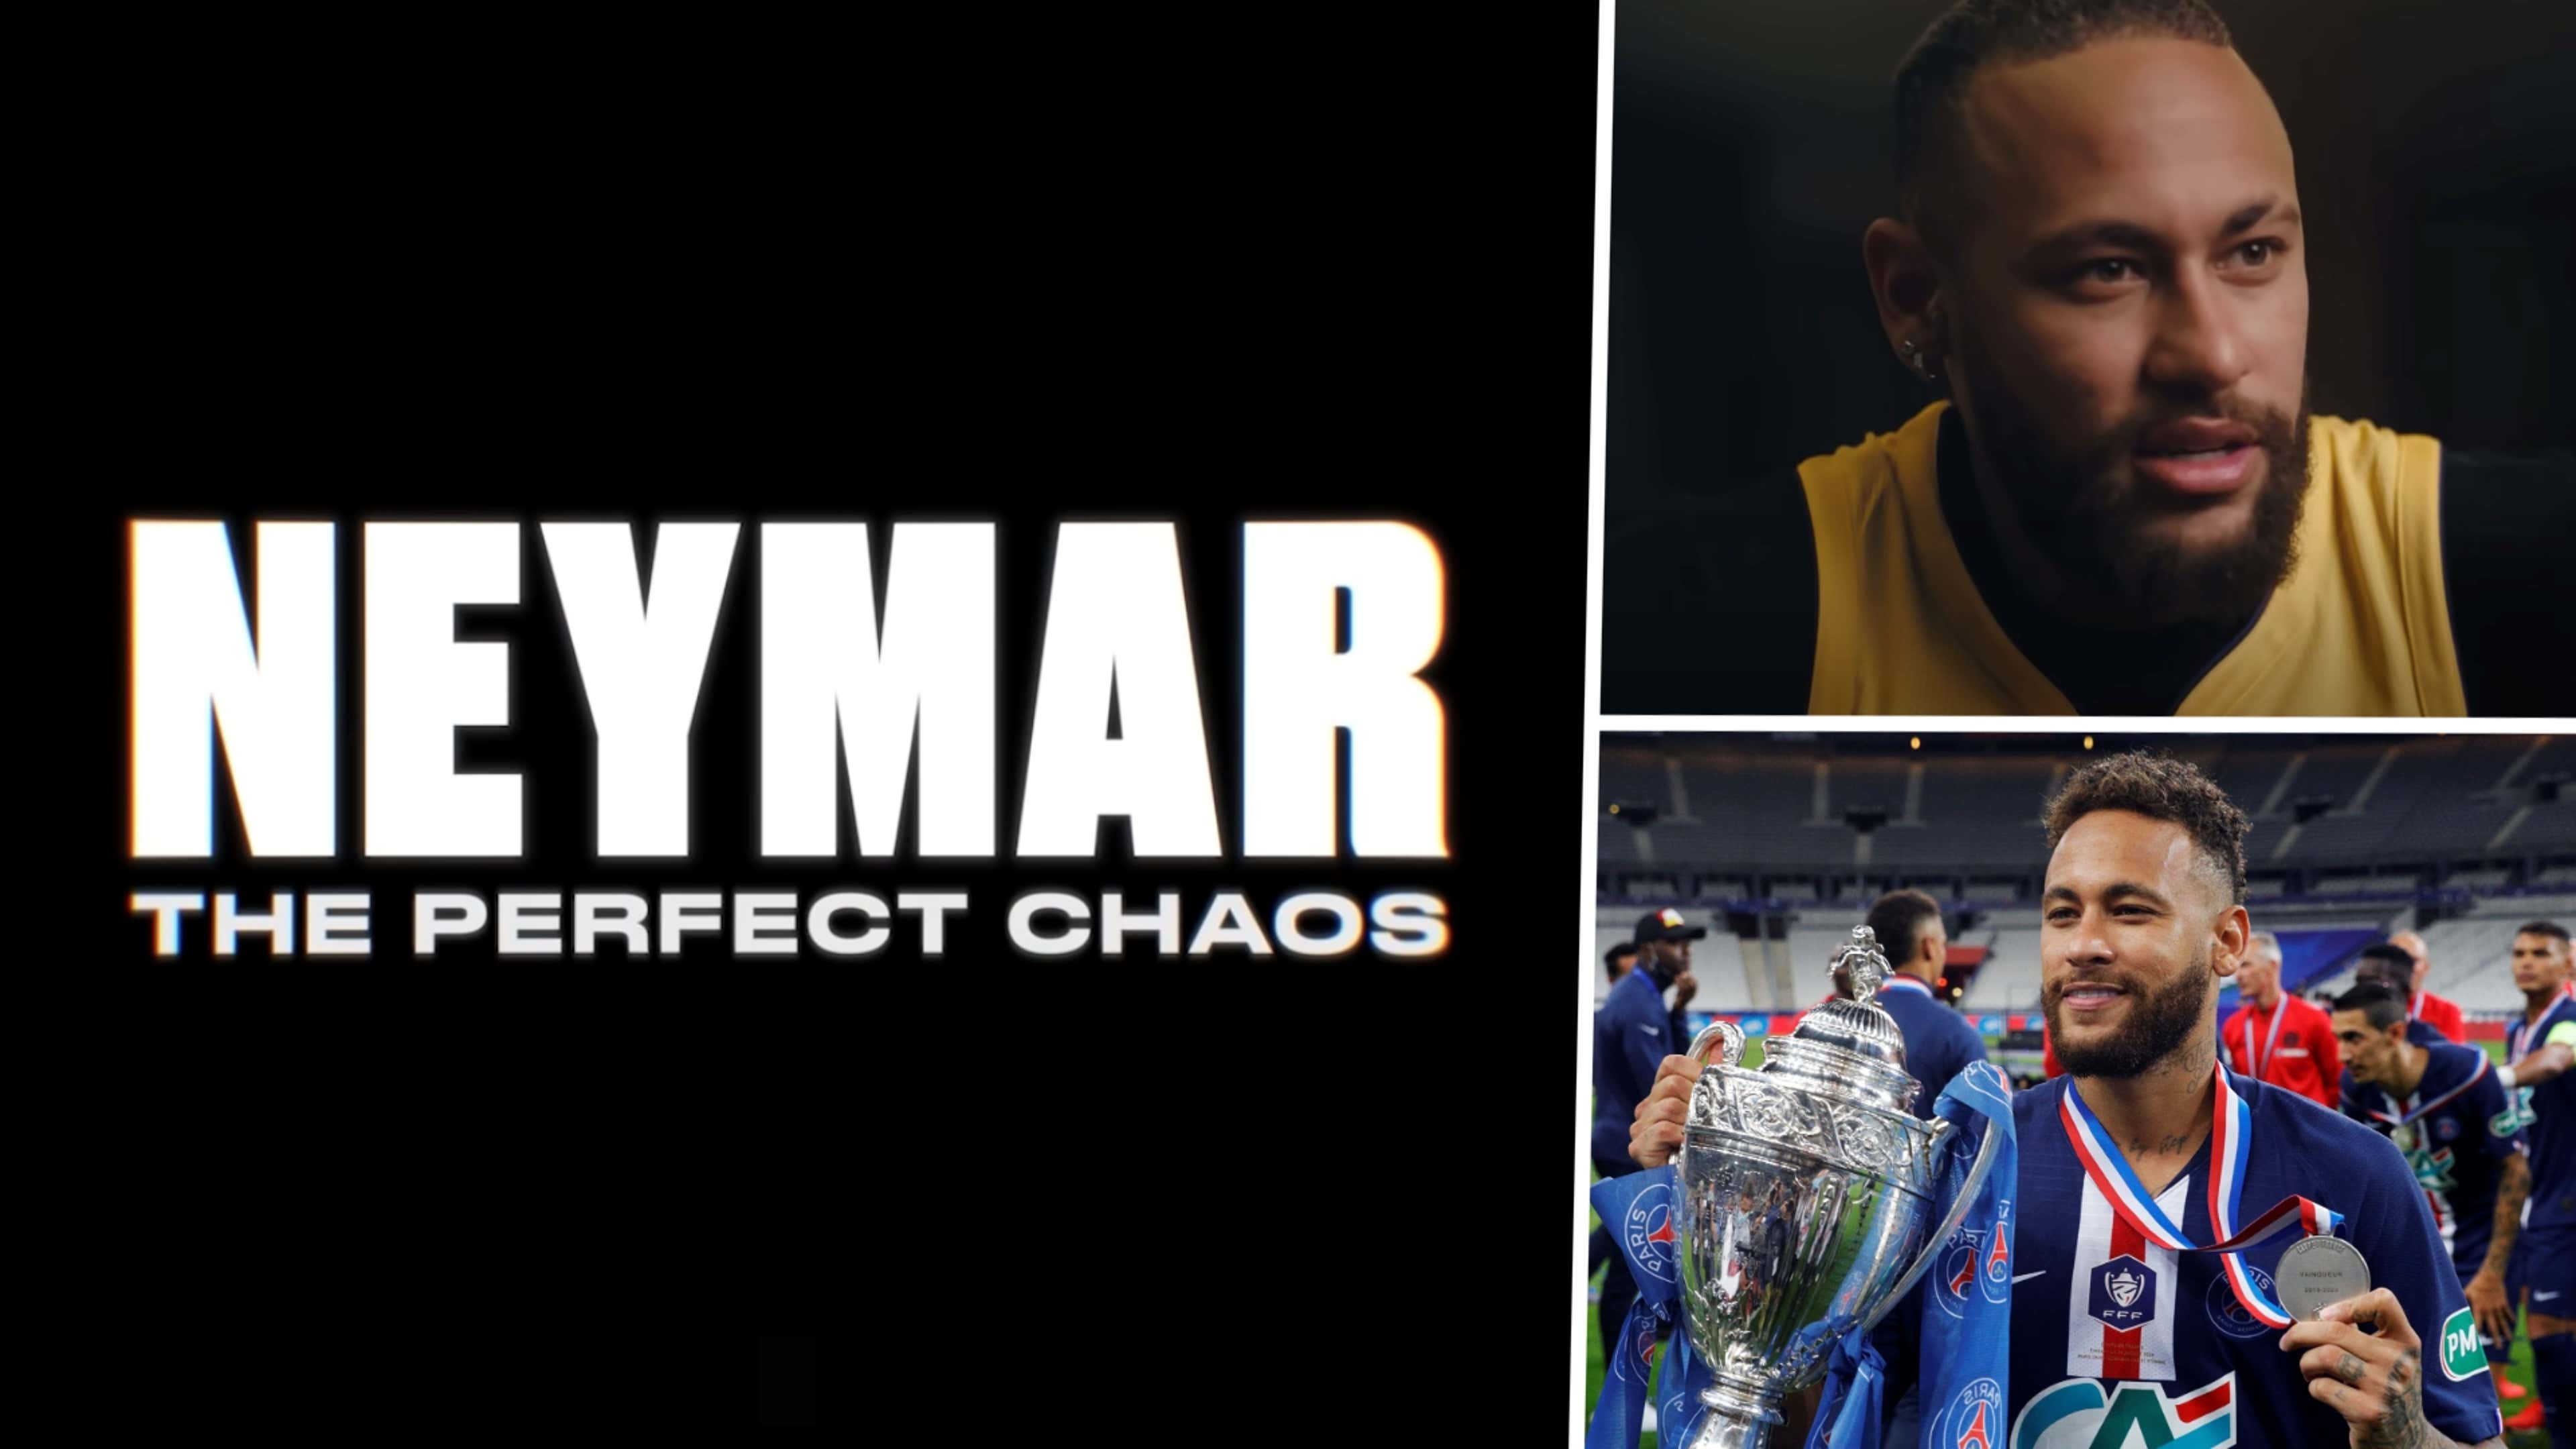 Neymar: The Perfect Chaos documentary